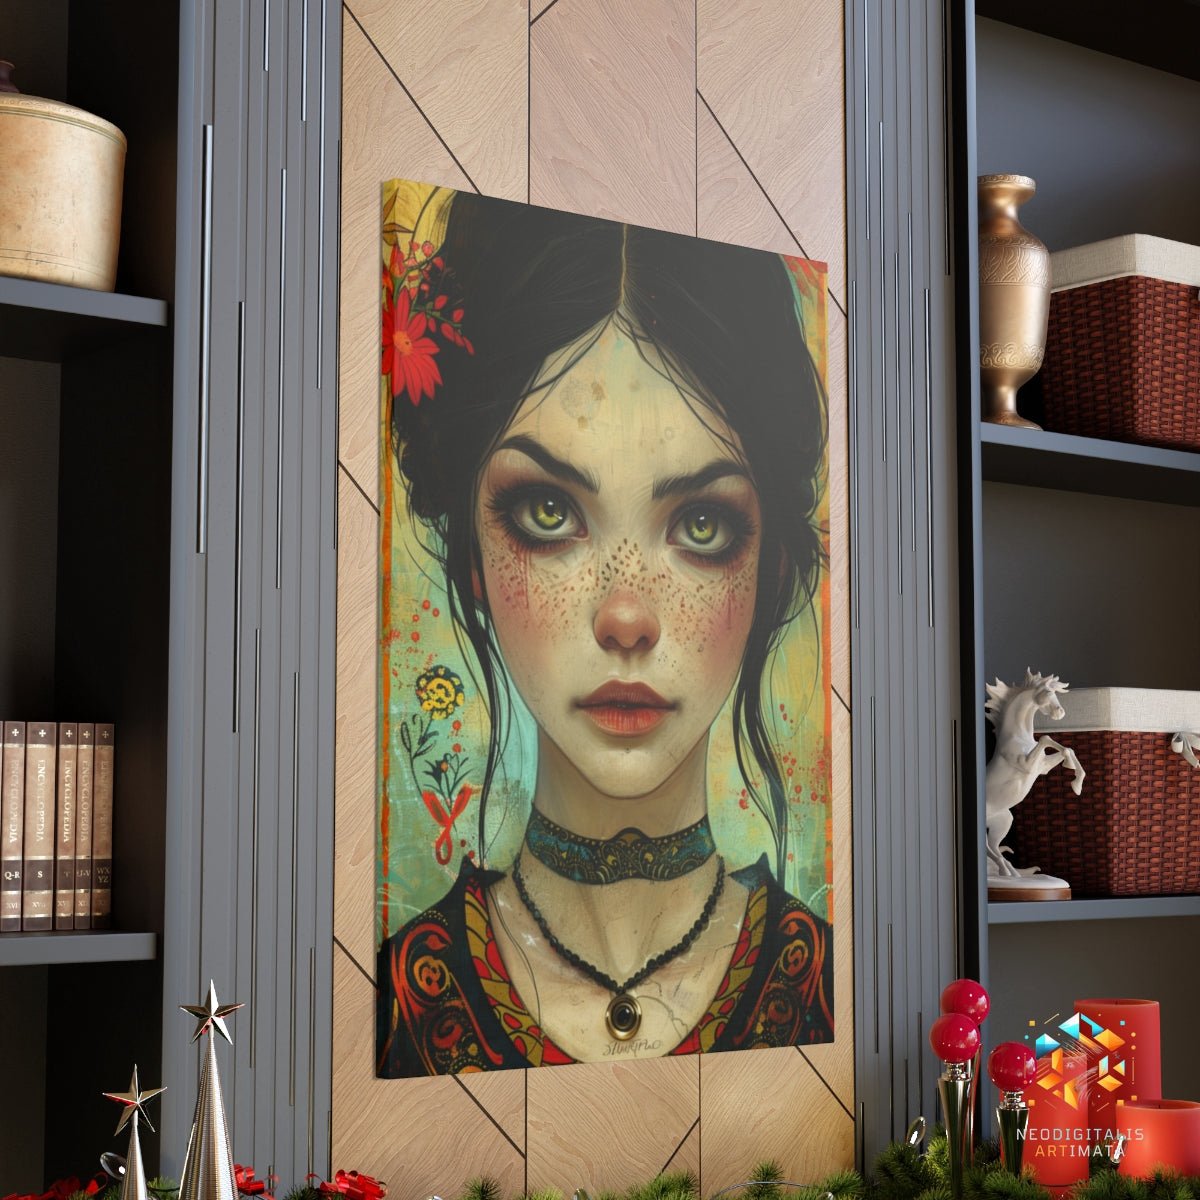 Enchanted Glance Florals - Original Pop Surrealism Style Portrait Wall Art - NeoDIGITALis ARTimata